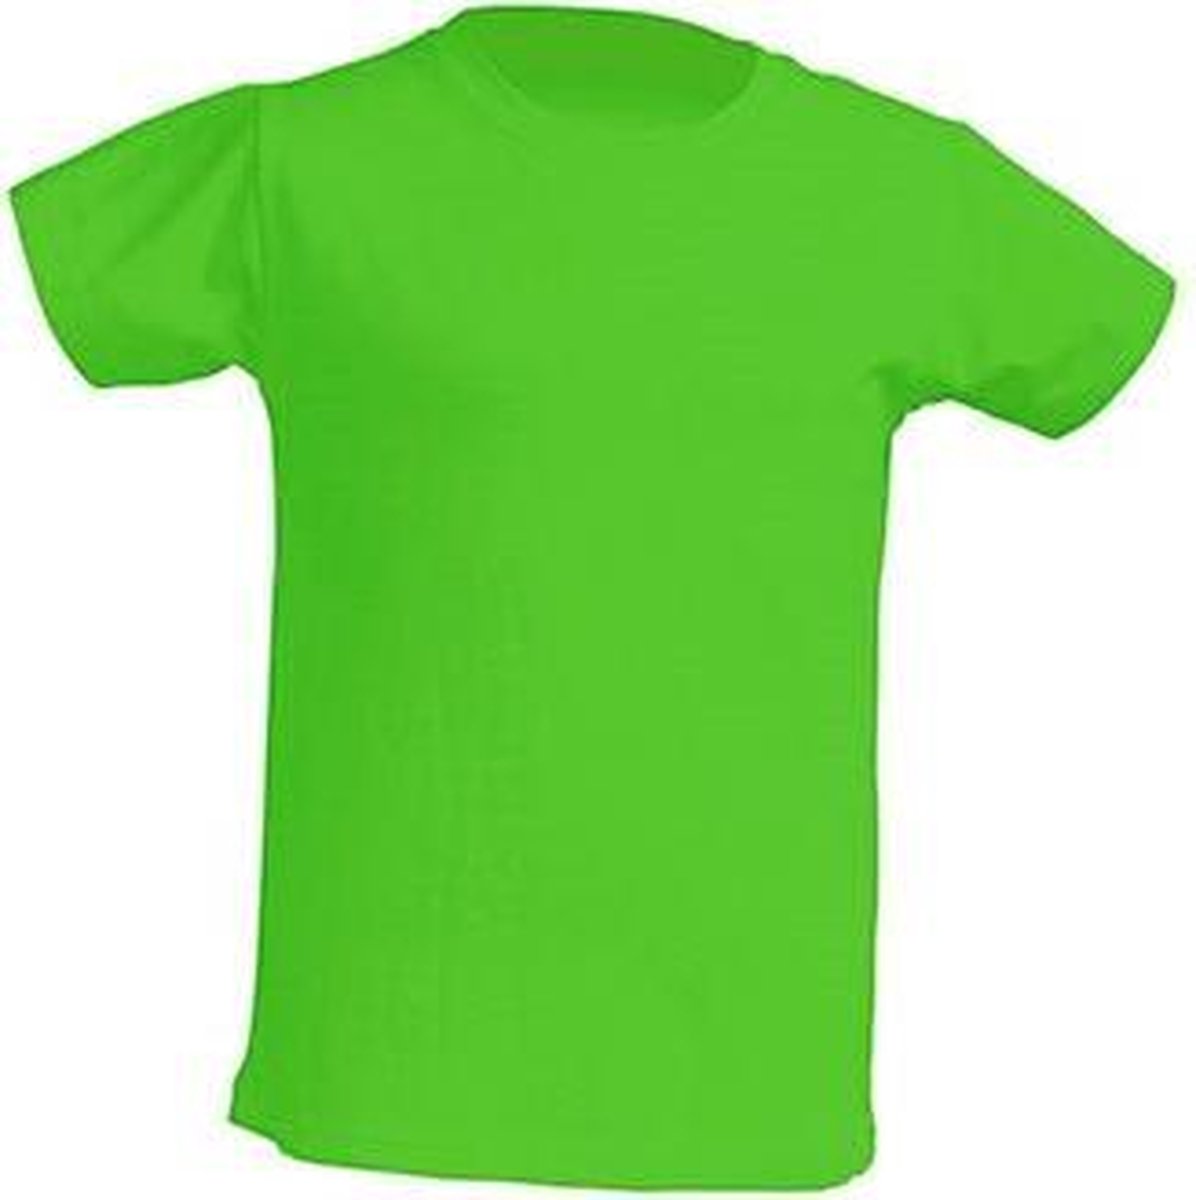 JHK Kinder t-shirt in lime maat 7-8 jaar (128) - set van 5 stuks